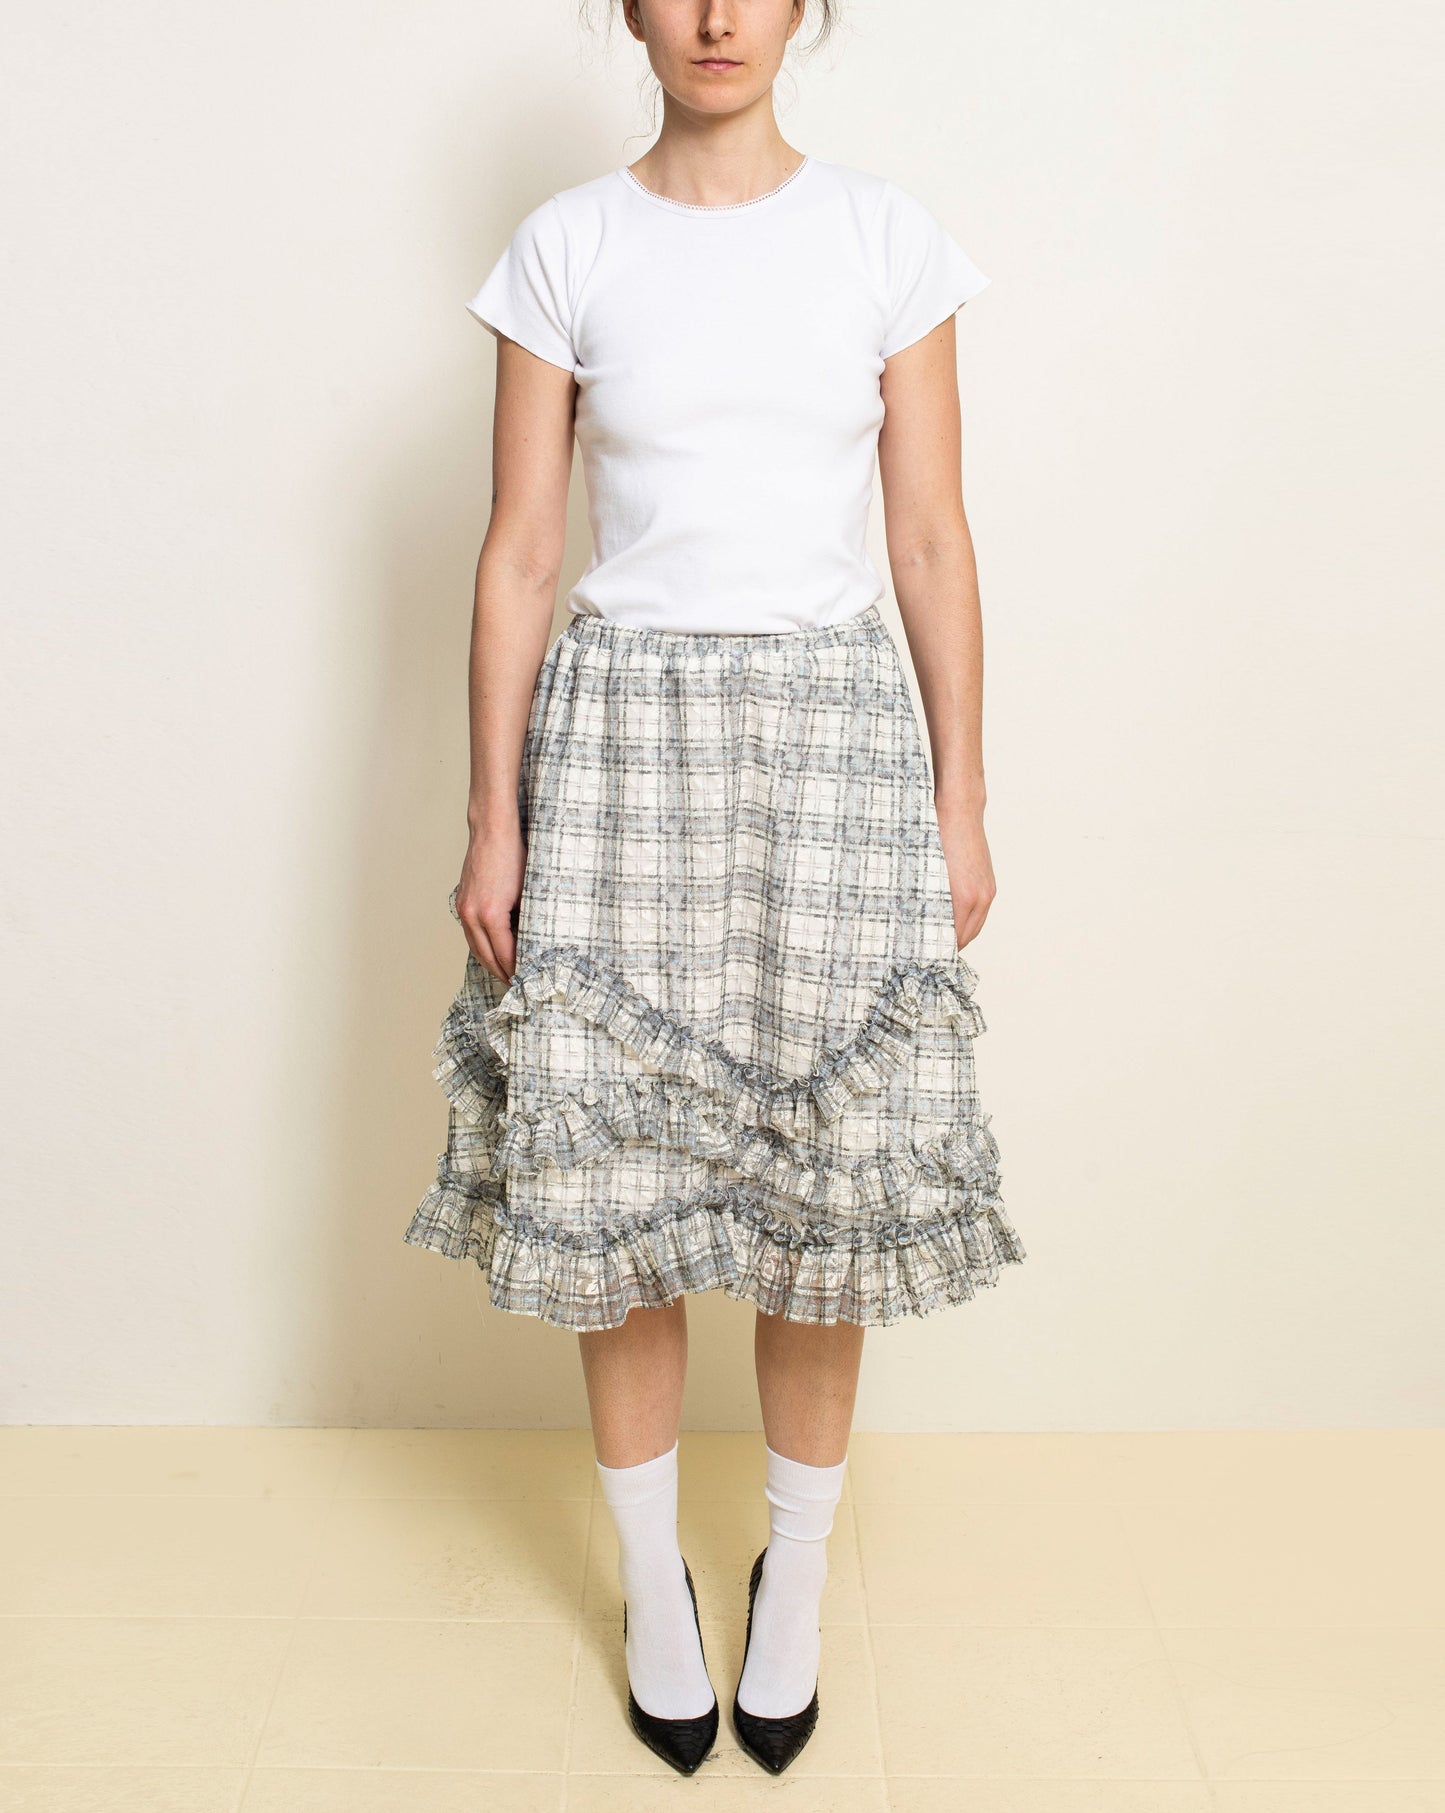 yushokobayashi - Check Lace Skirt